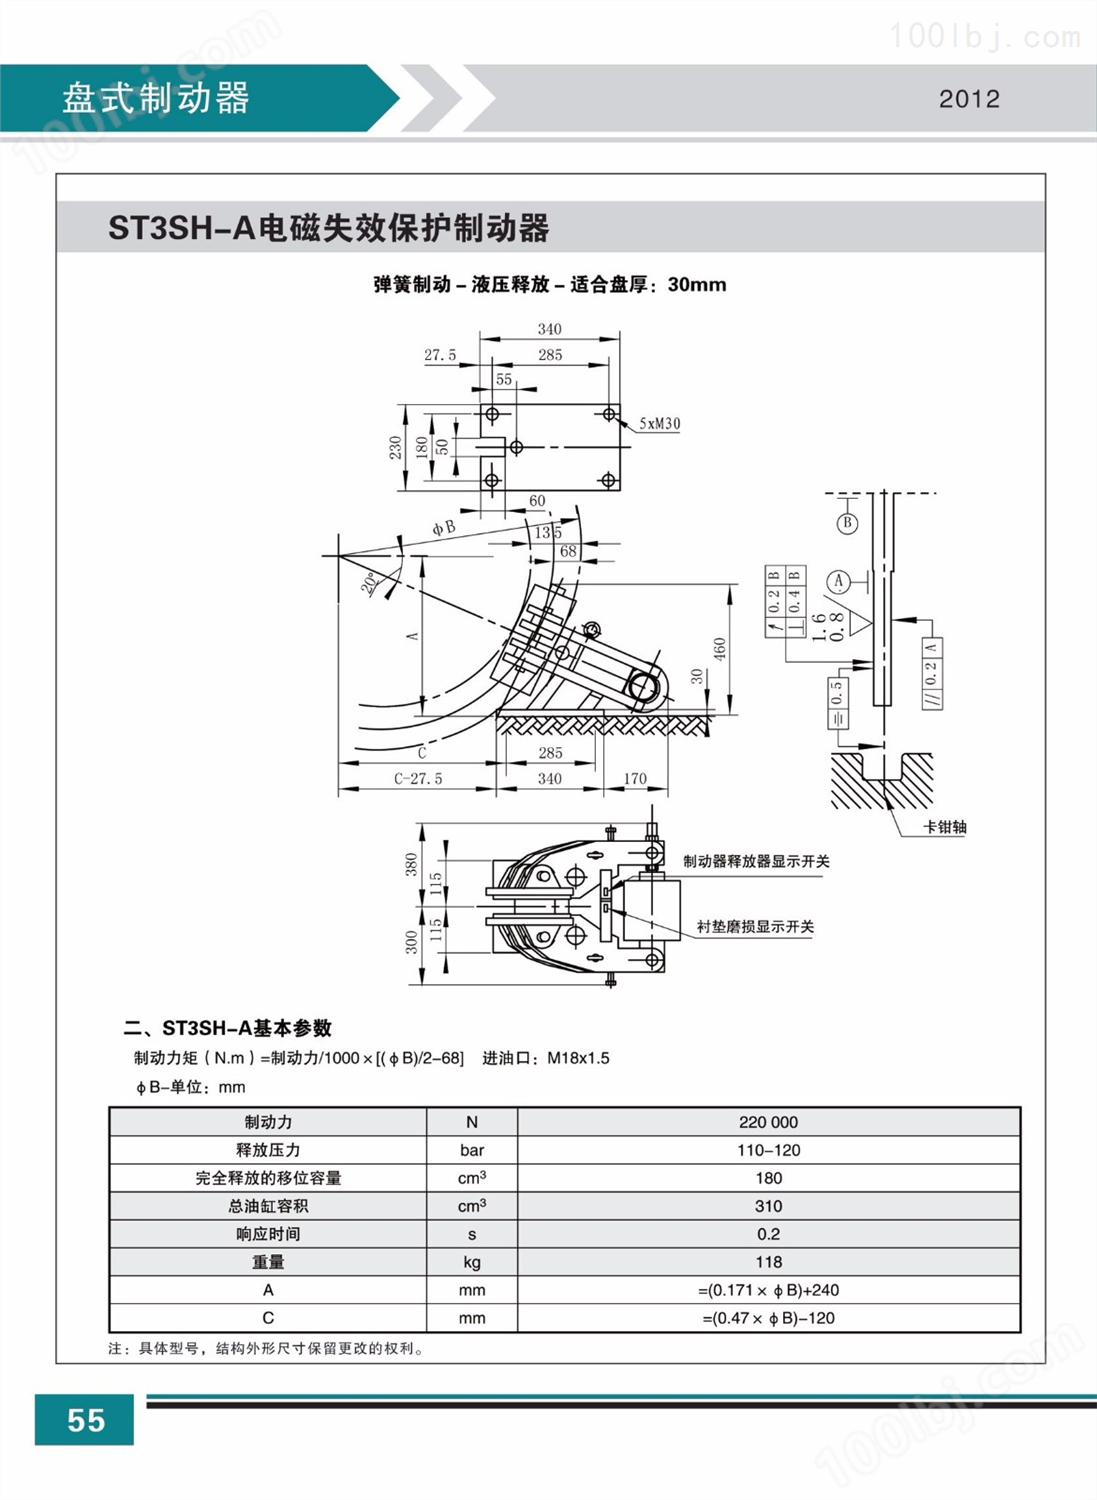 ST3SH-A电磁失效保护制动器